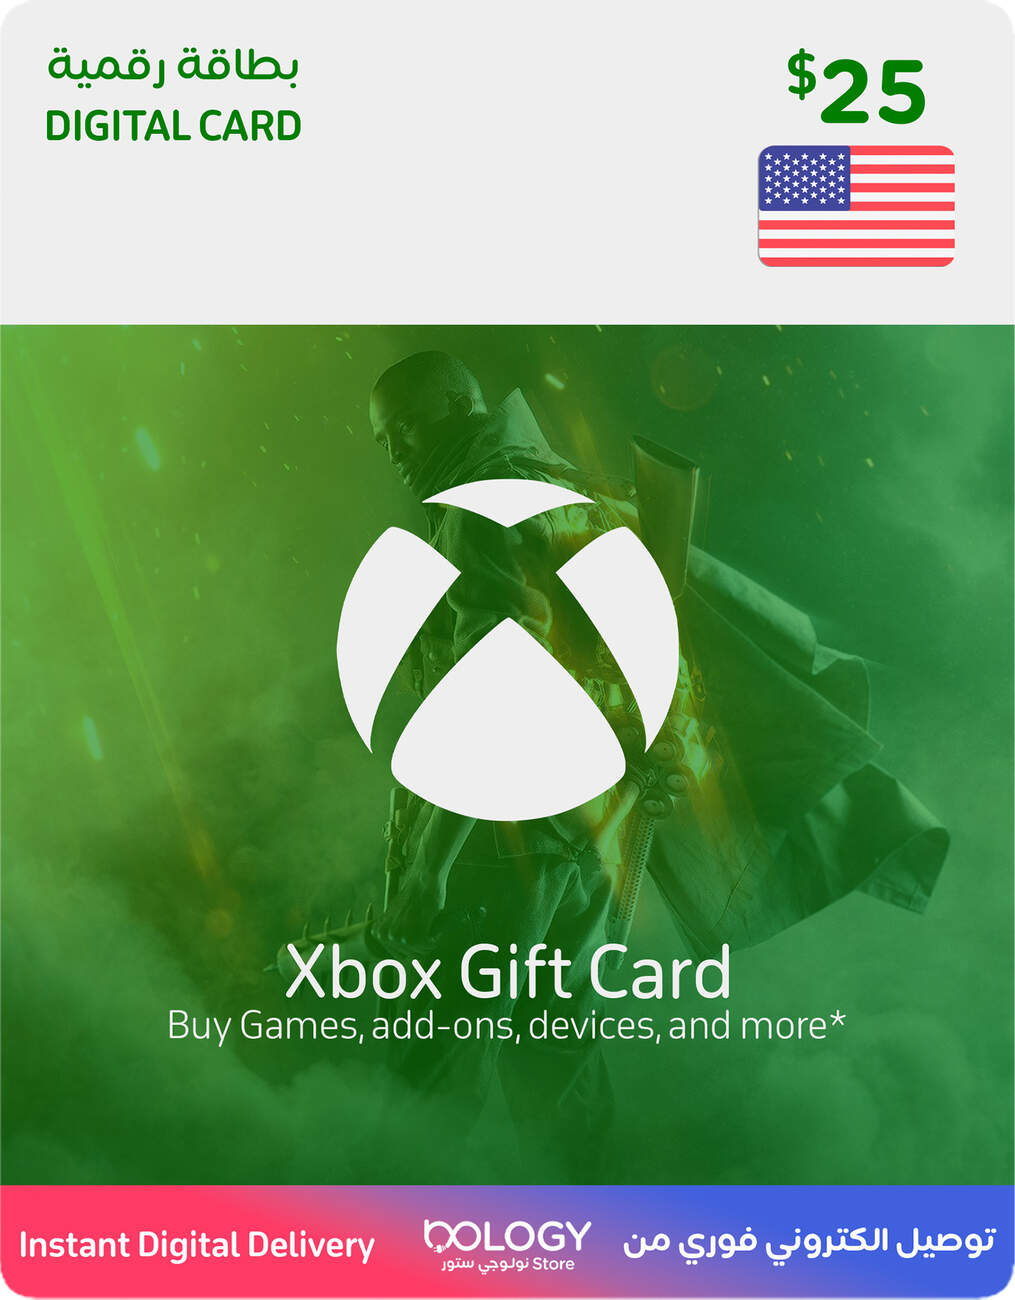 50 Dollar Xbox Gift Card - Roblox